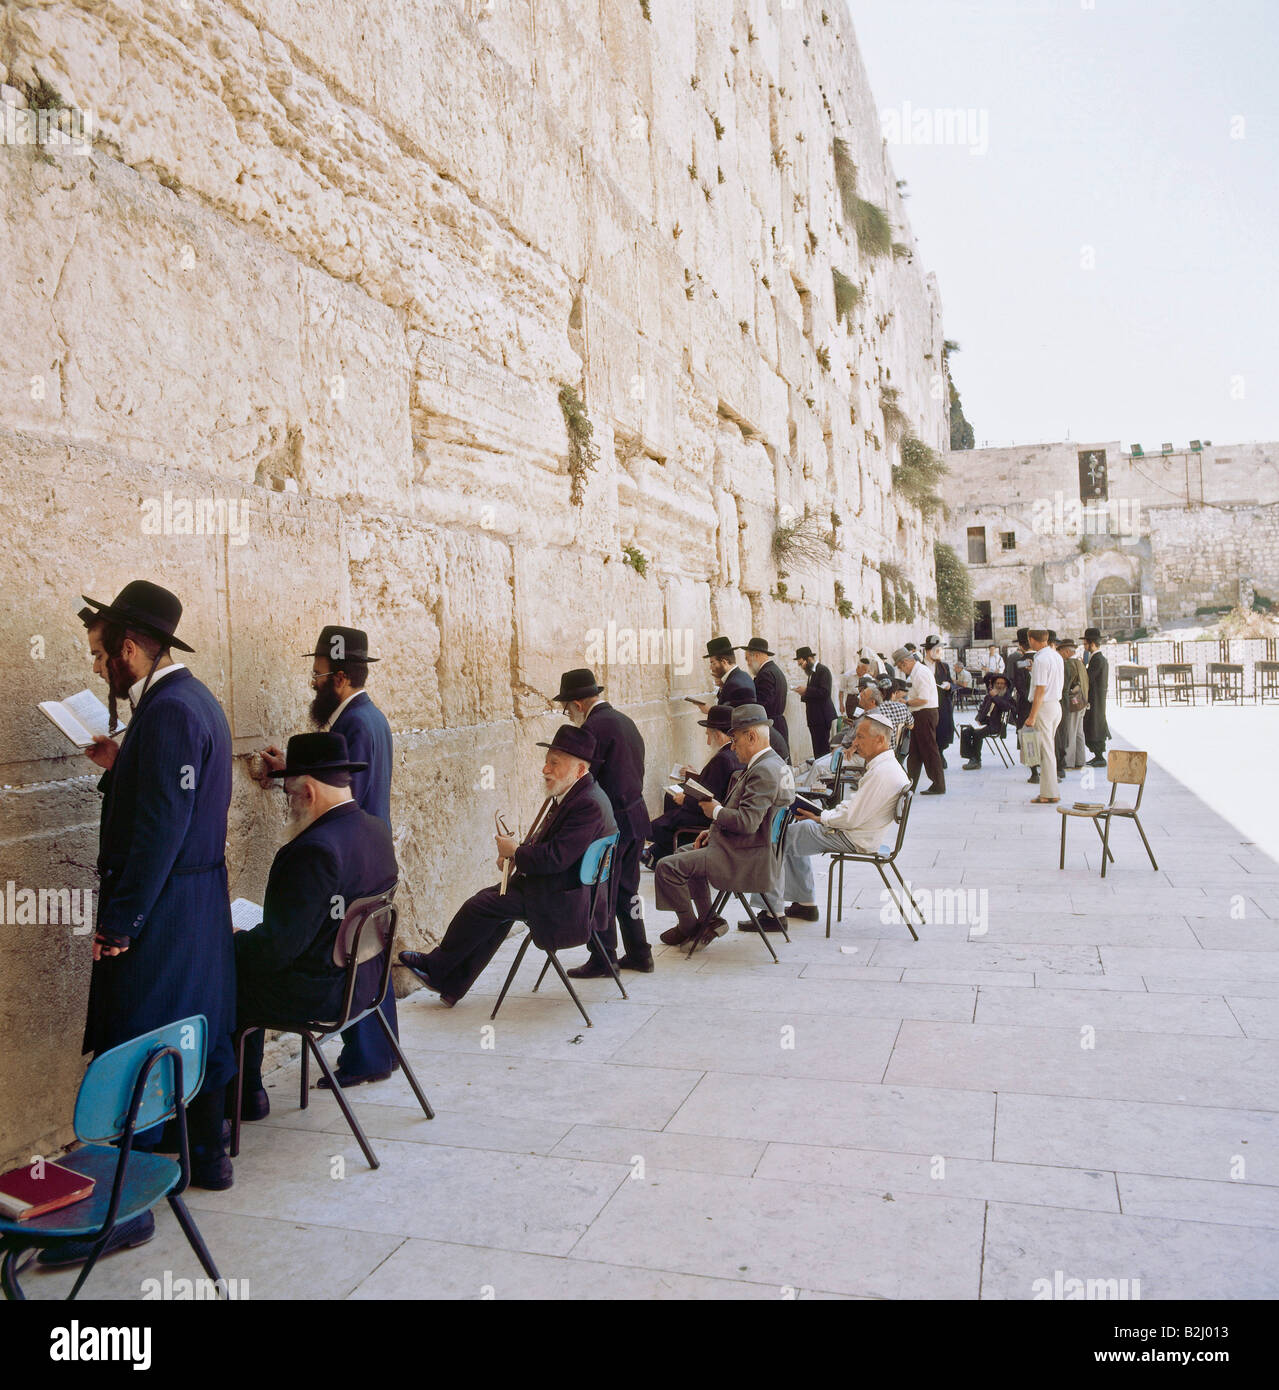 geography-travel-jerusalem-israel-wailing-wall-orthodox-jews-praying-B2J013.jpg